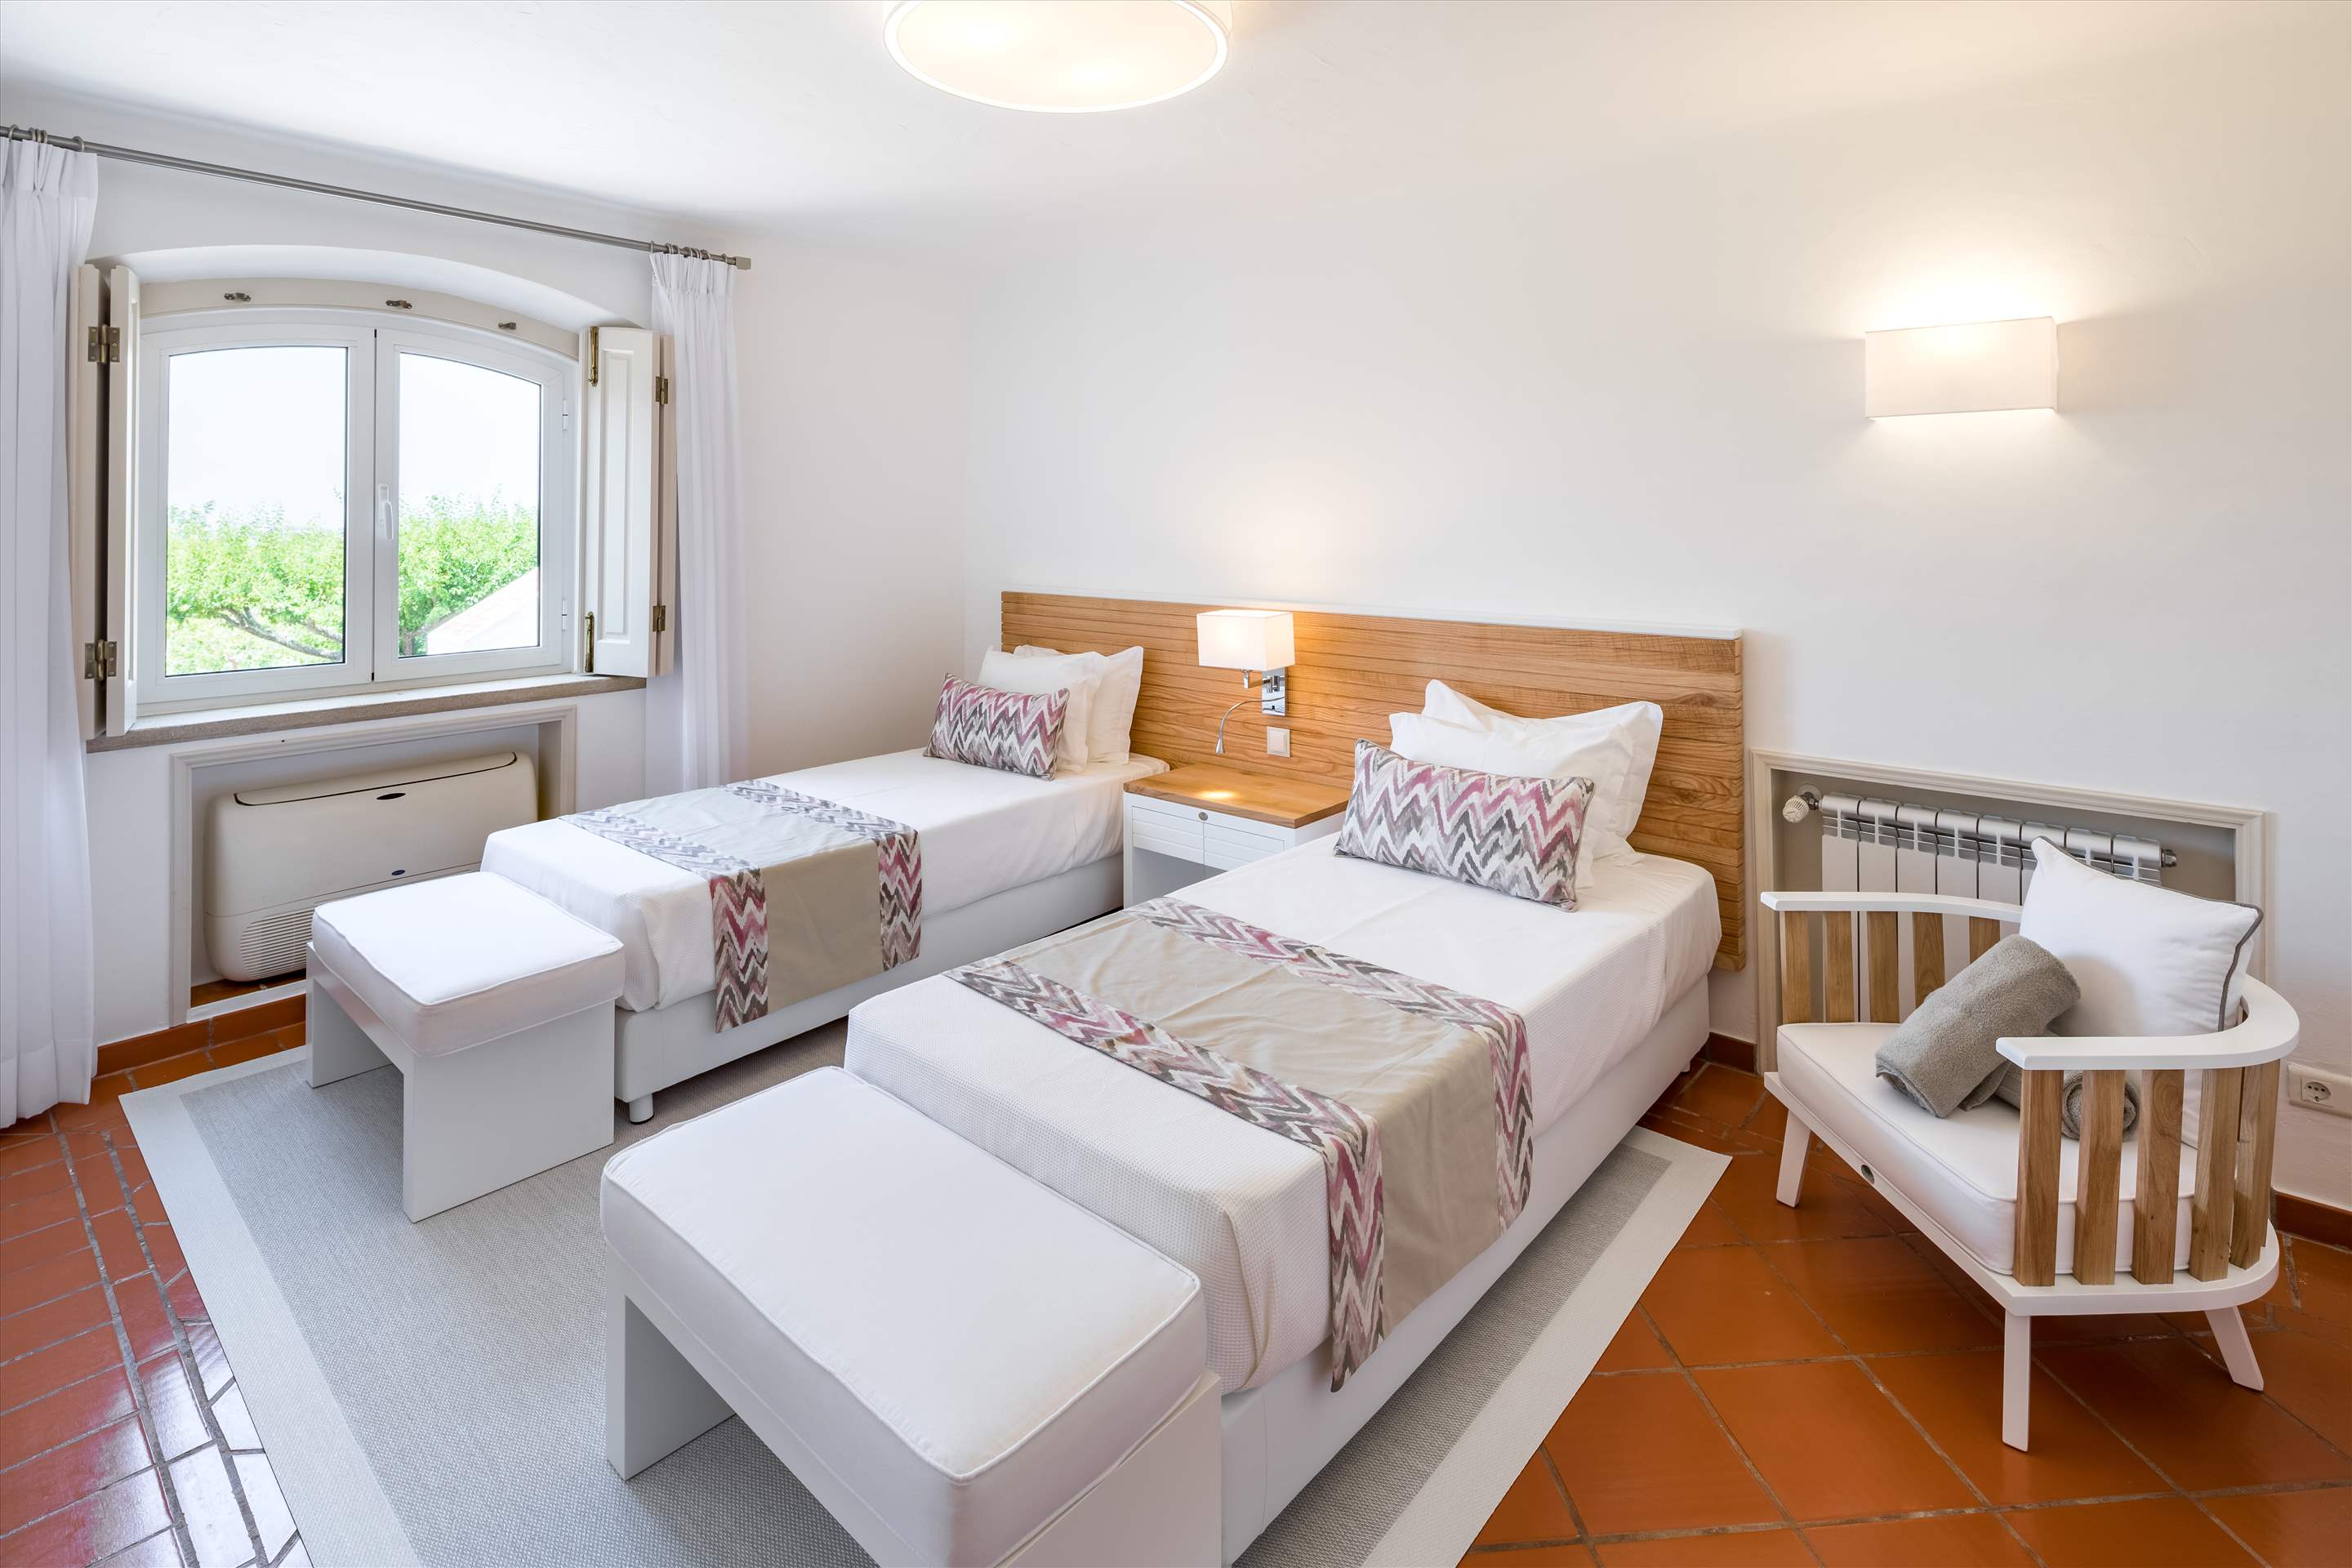 Casa da Montanha, 11-12 persons, 7 bedroom villa in Vilamoura Area, Algarve Photo #29